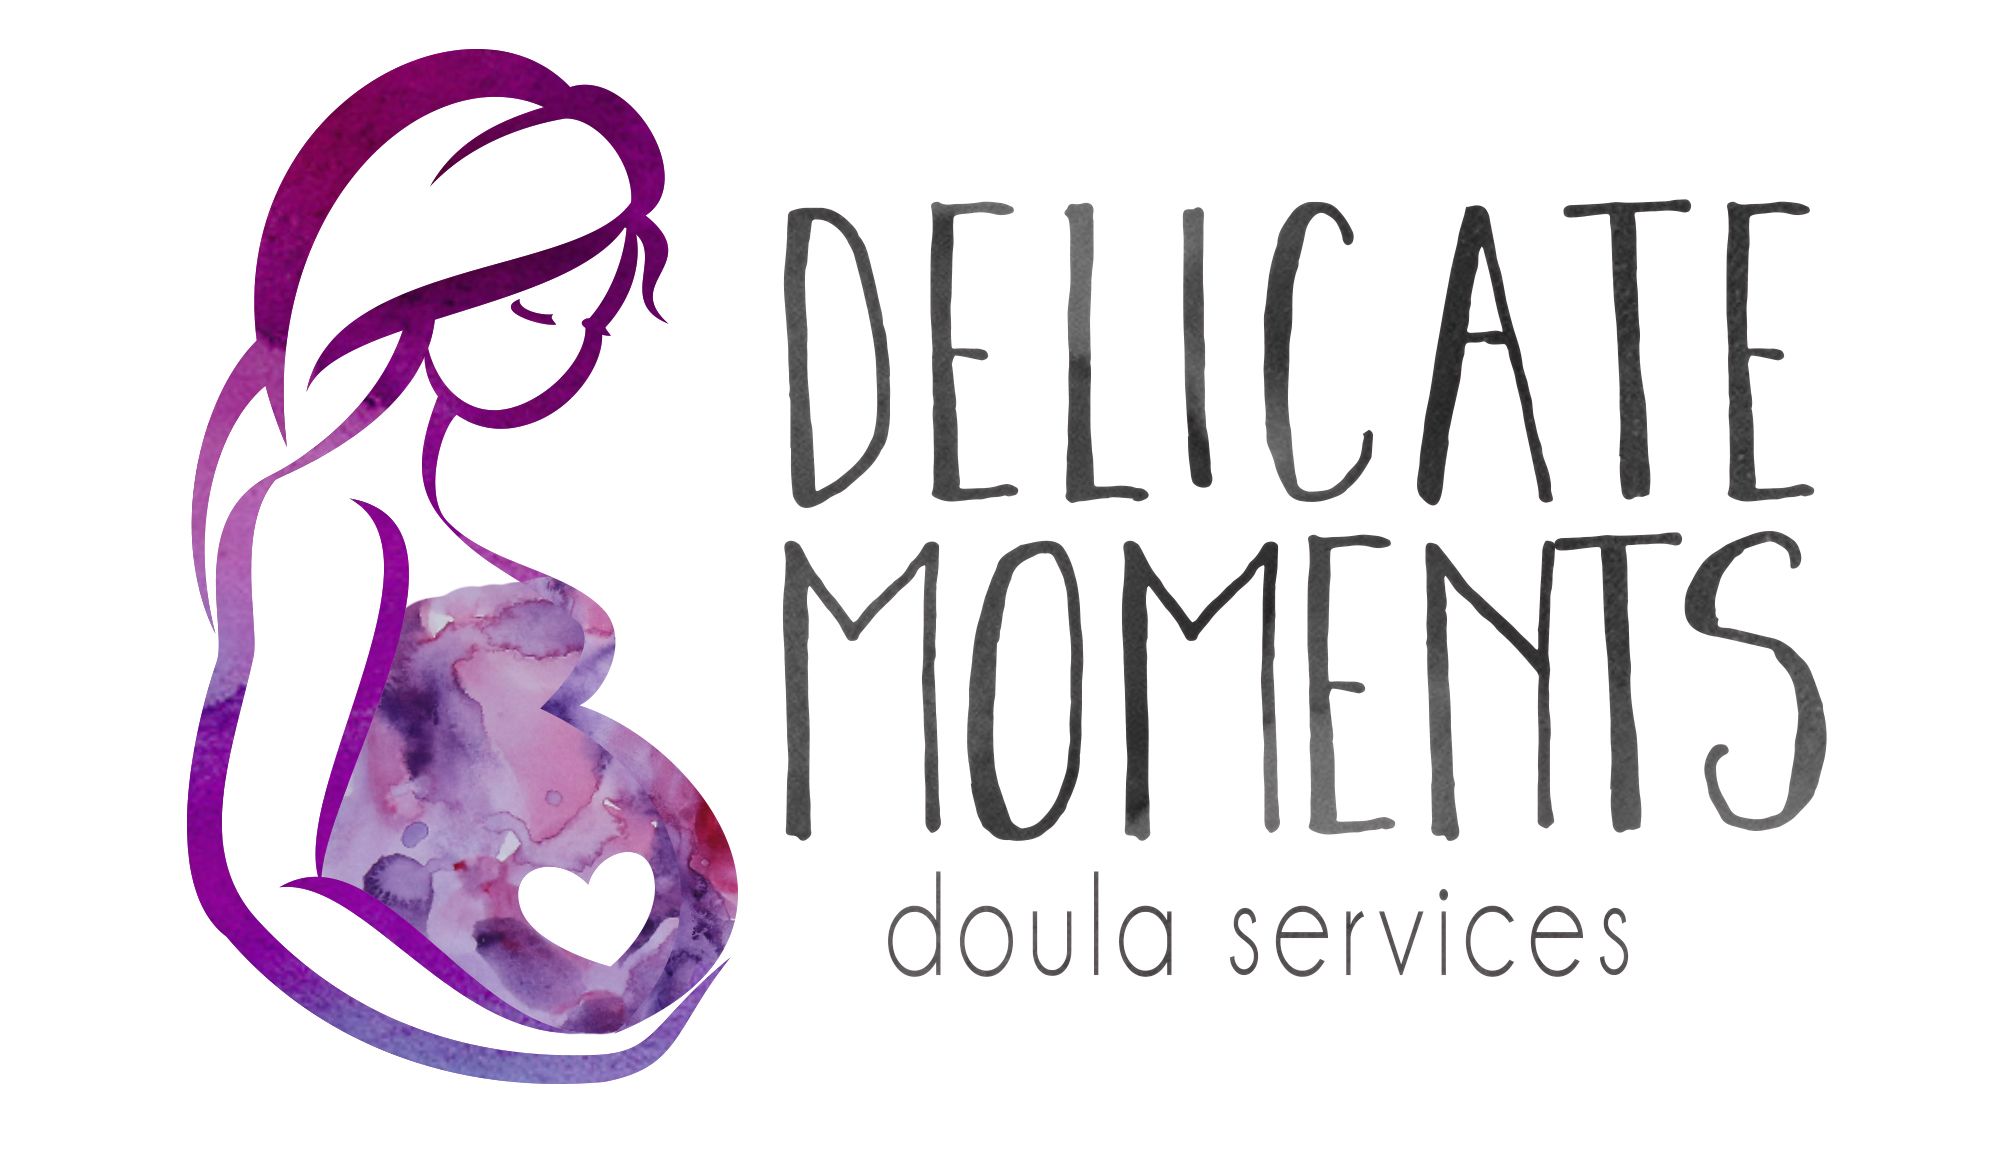 doula logo ideas 2